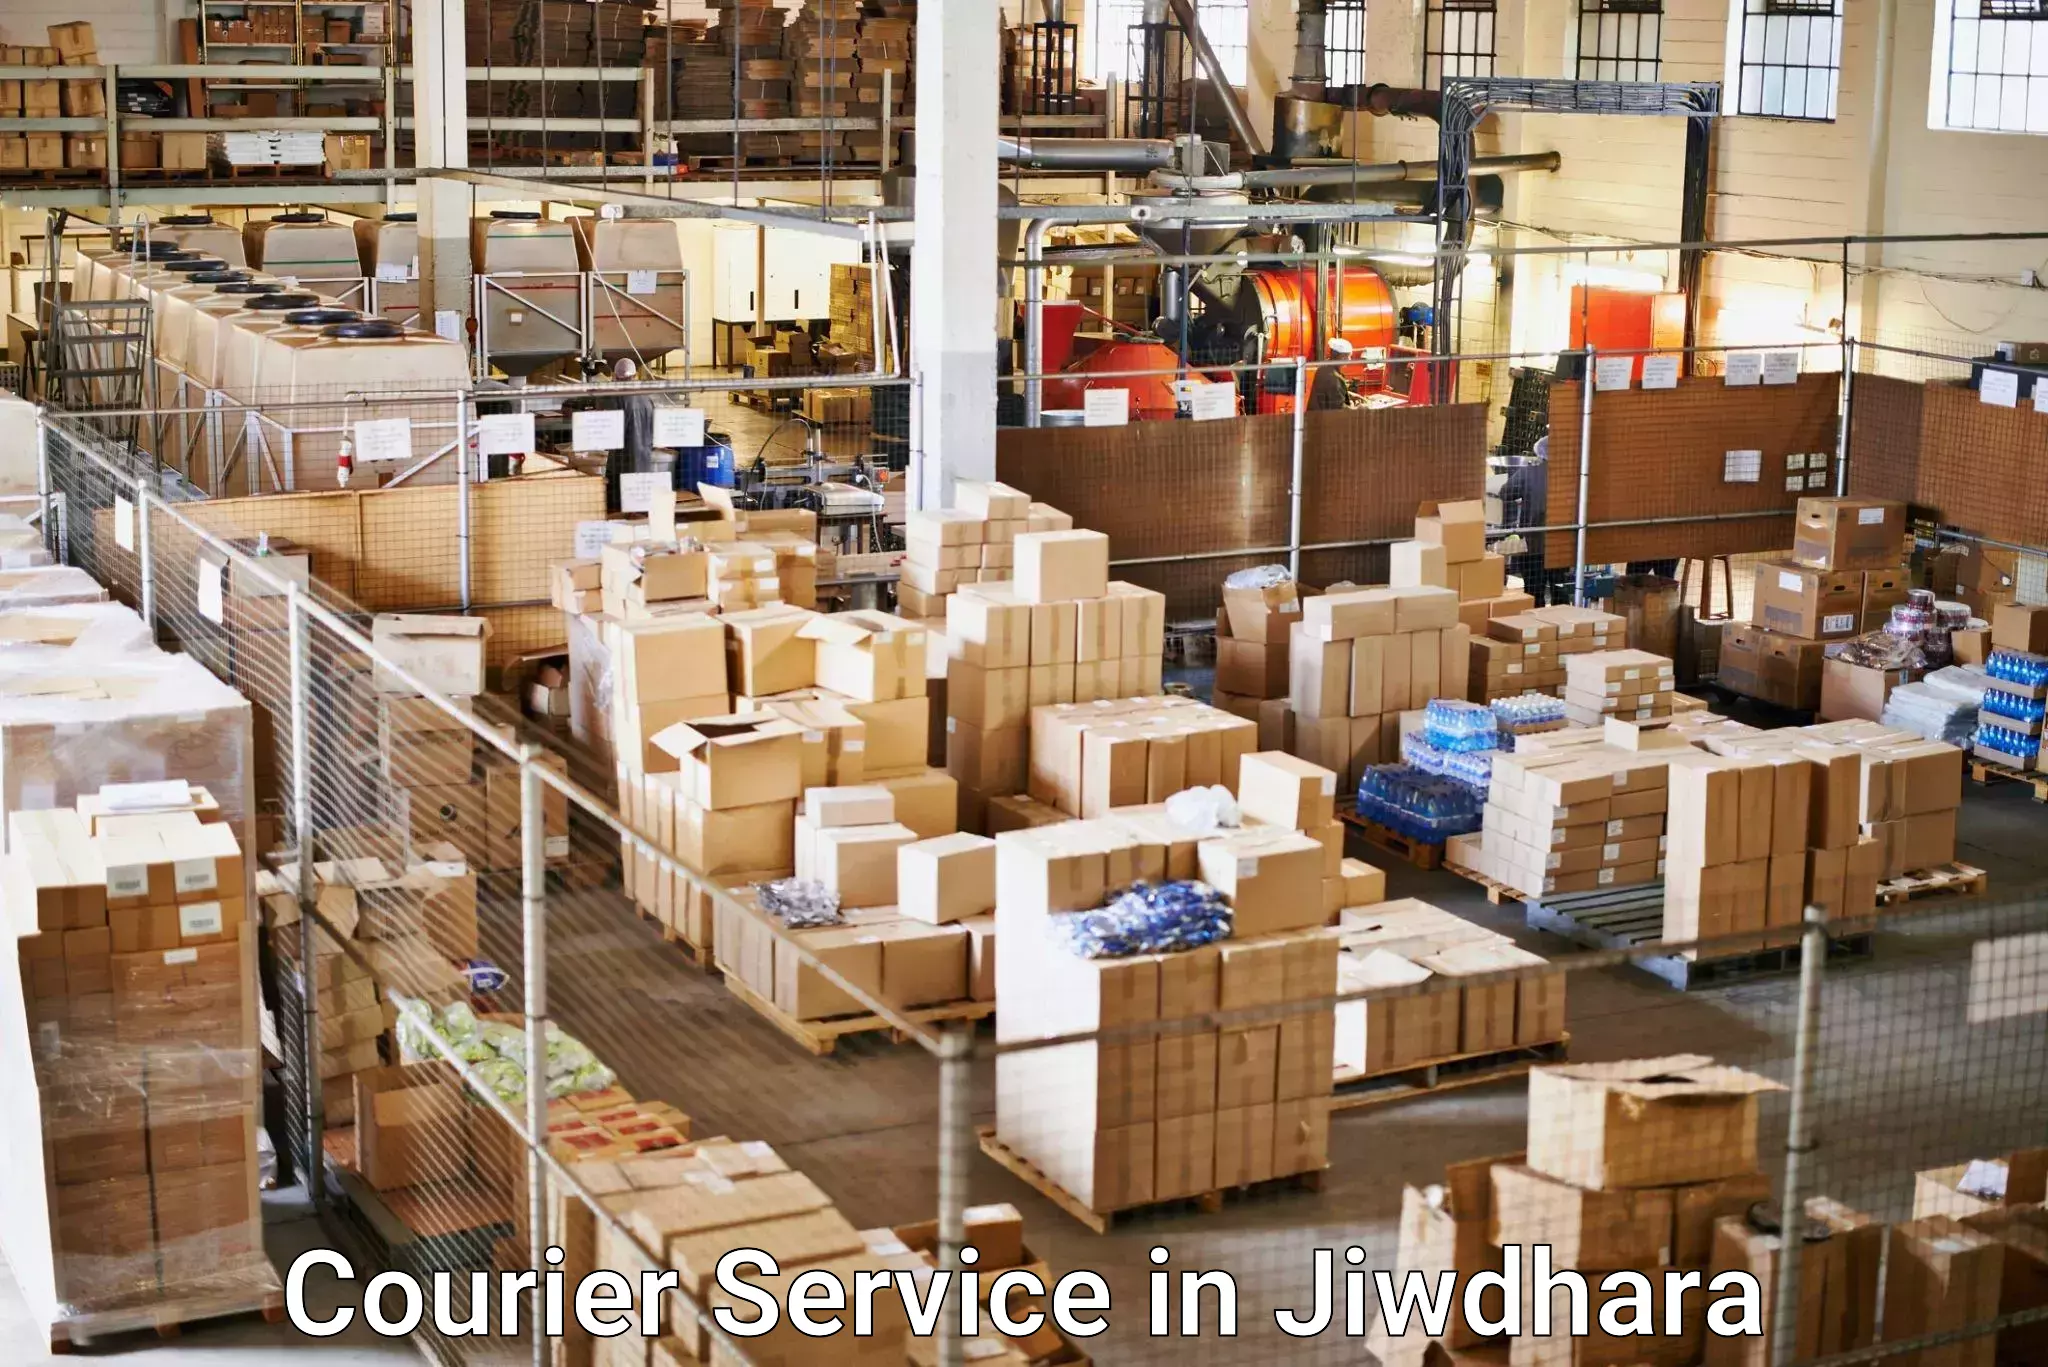 Logistics efficiency in Jiwdhara